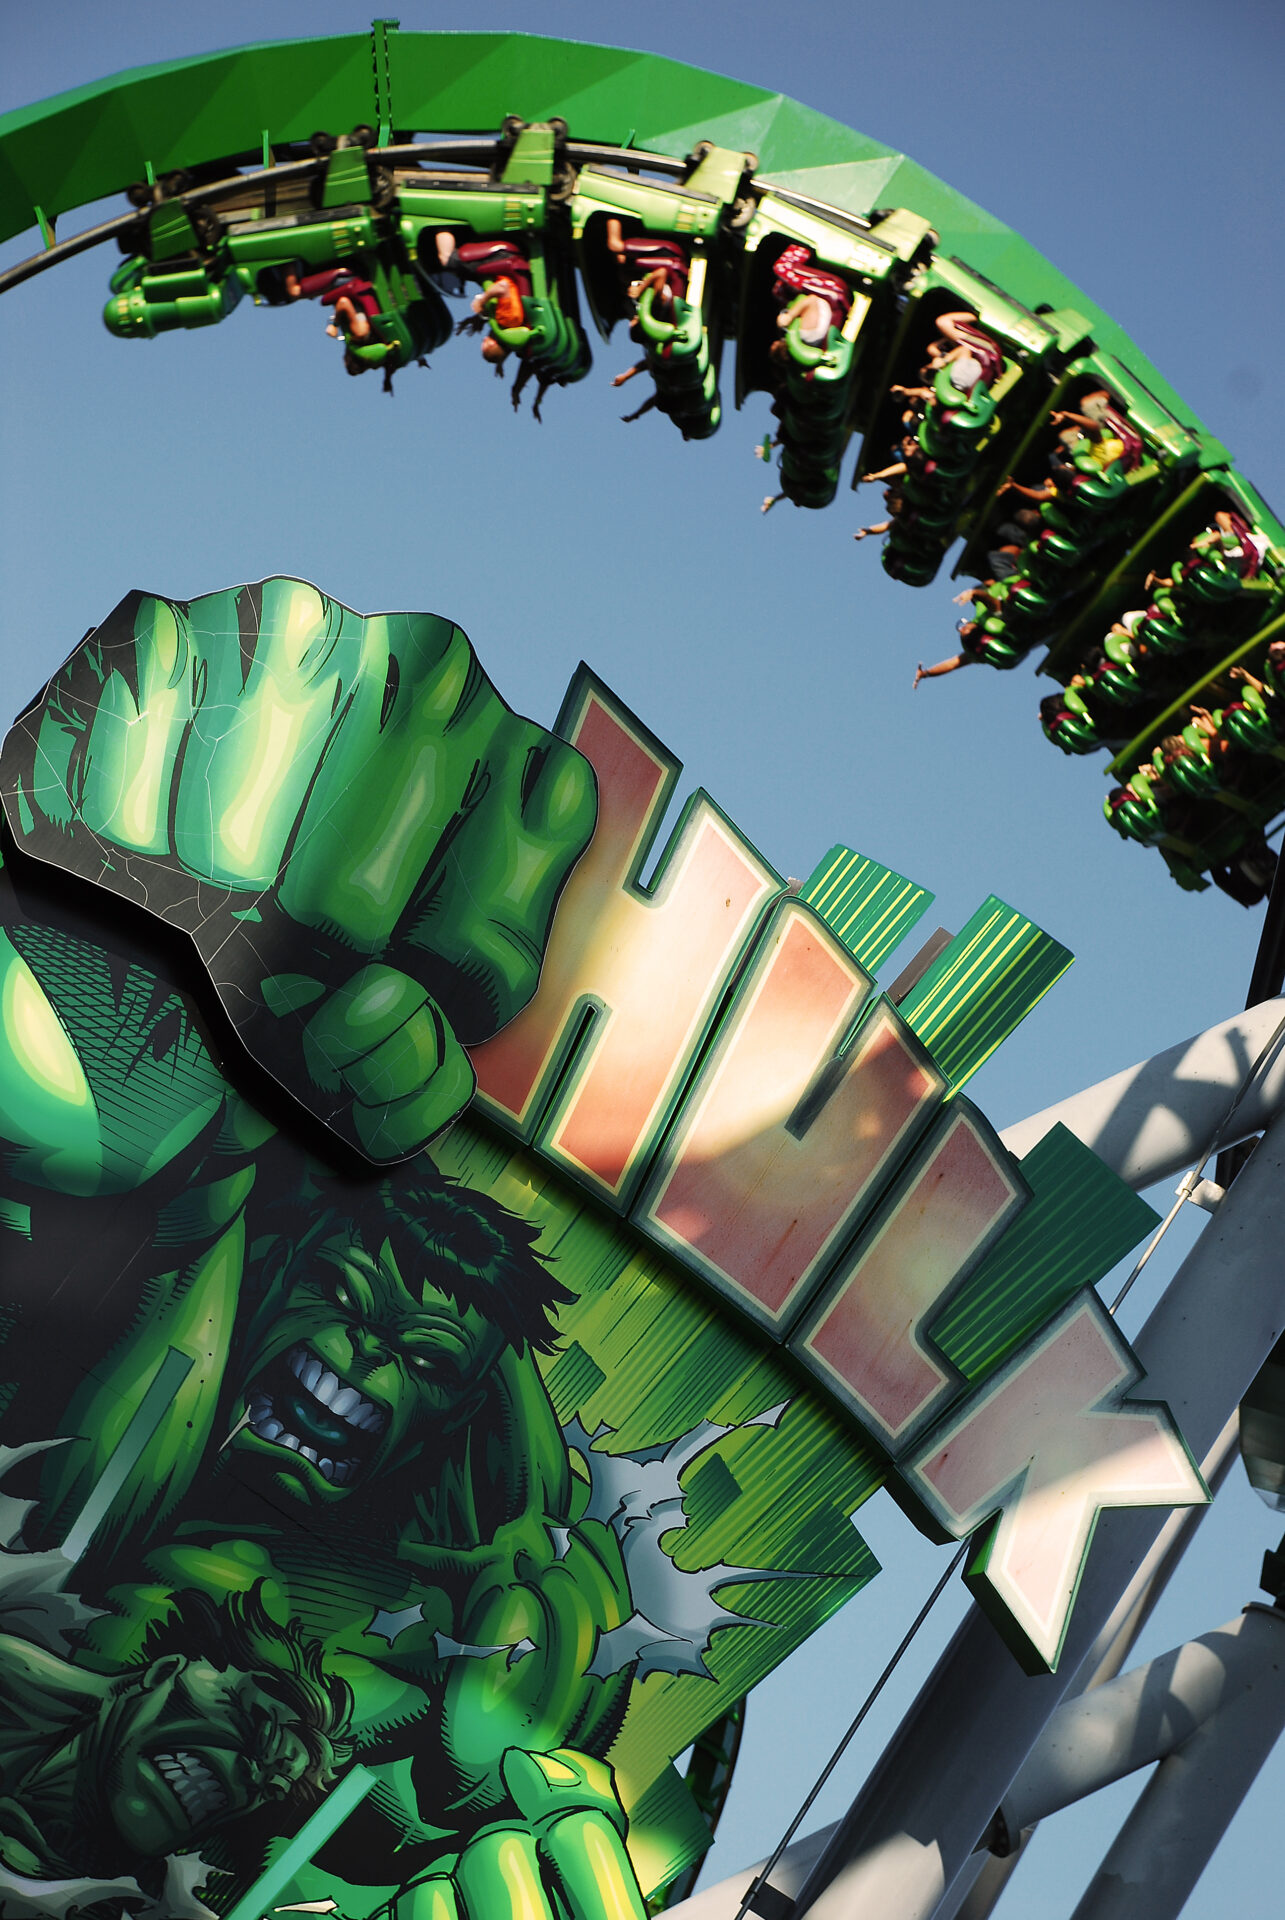 Universal Studios Islands of Adventure The Incredible Hulk Coaster Entrance amusement park themepark 07